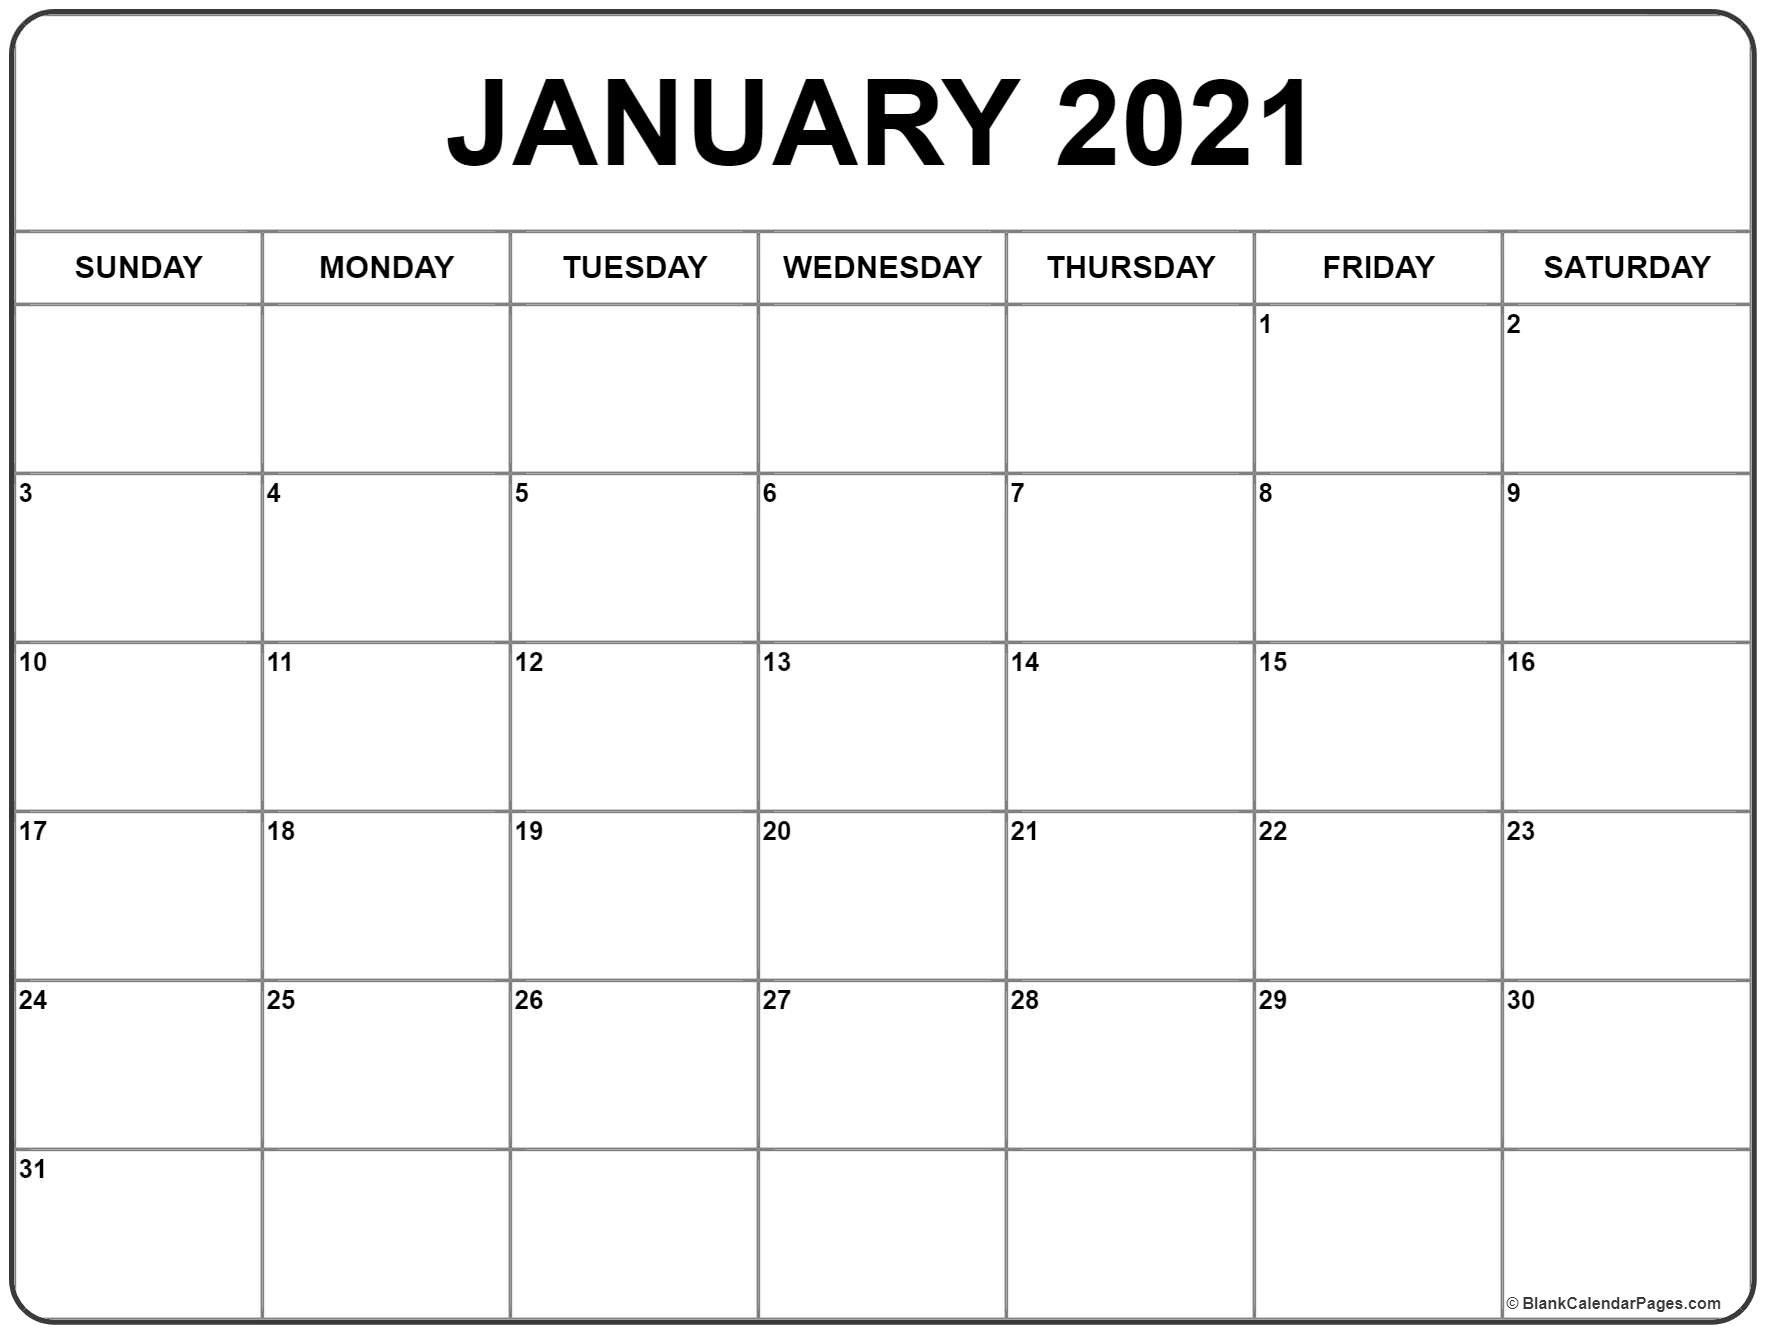 Get January 2021 Calendar